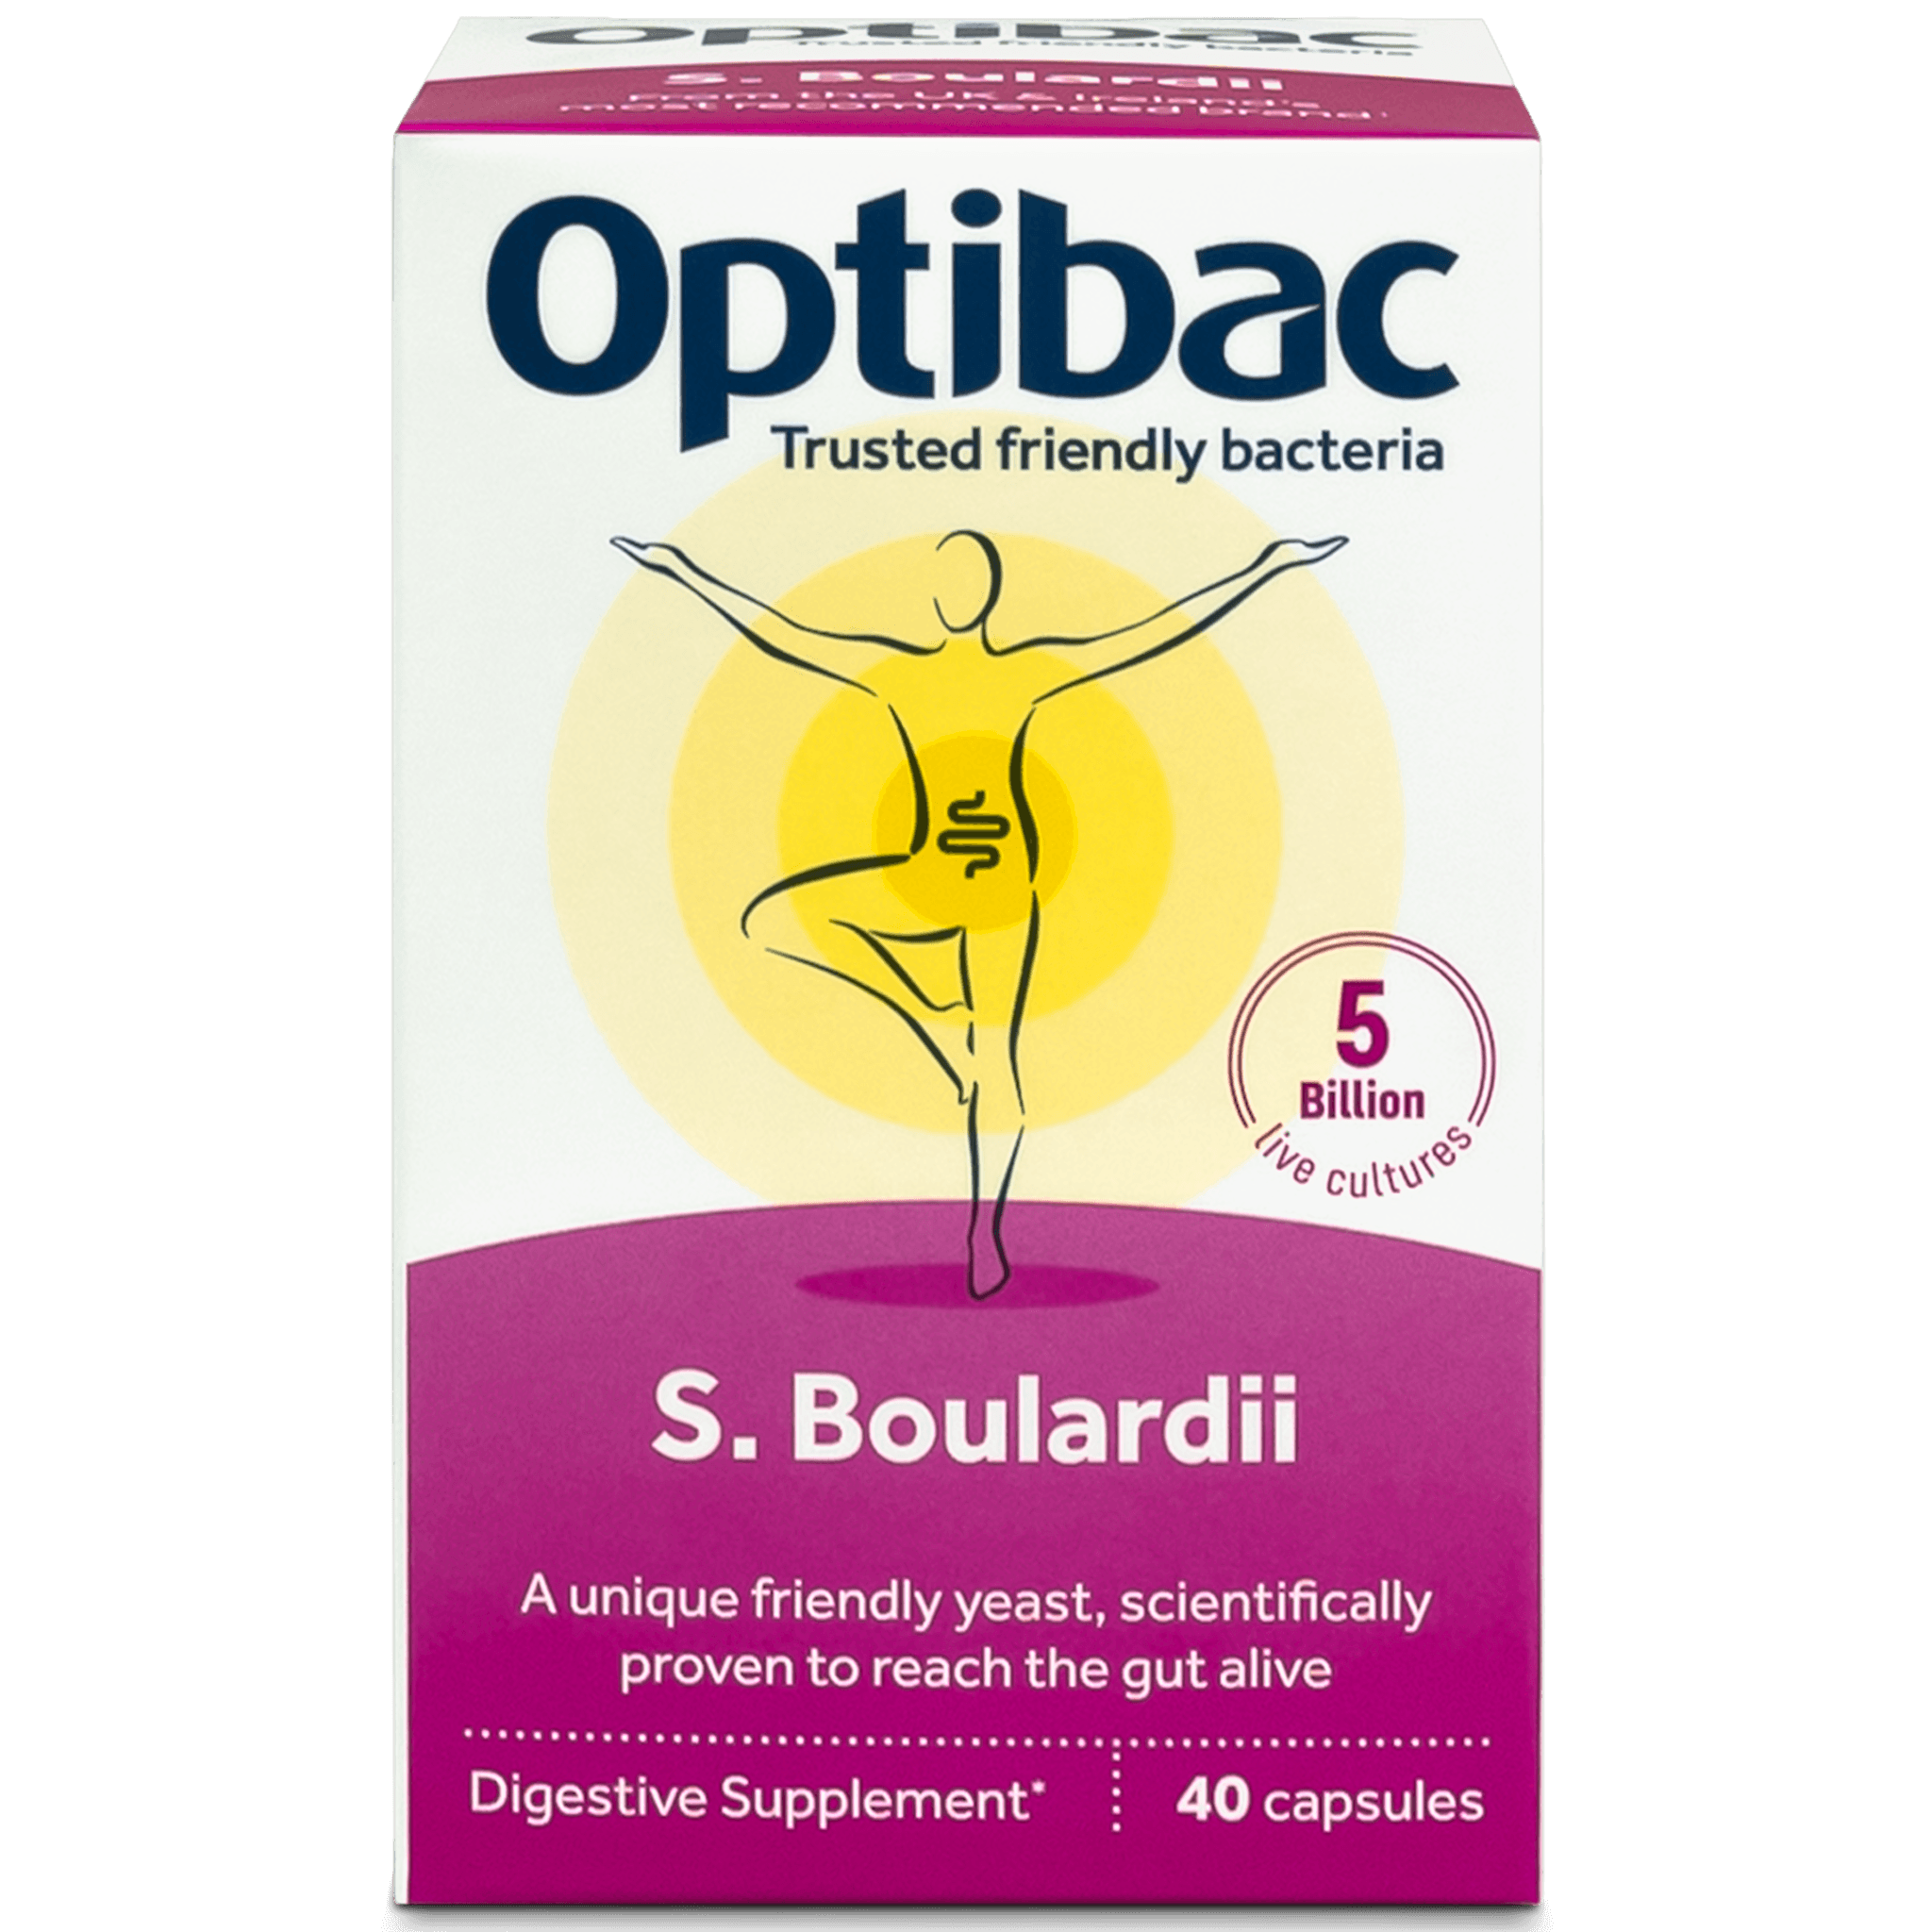 OptiBac Saccharomyces boulardii 40 capsules - MicroBio Health